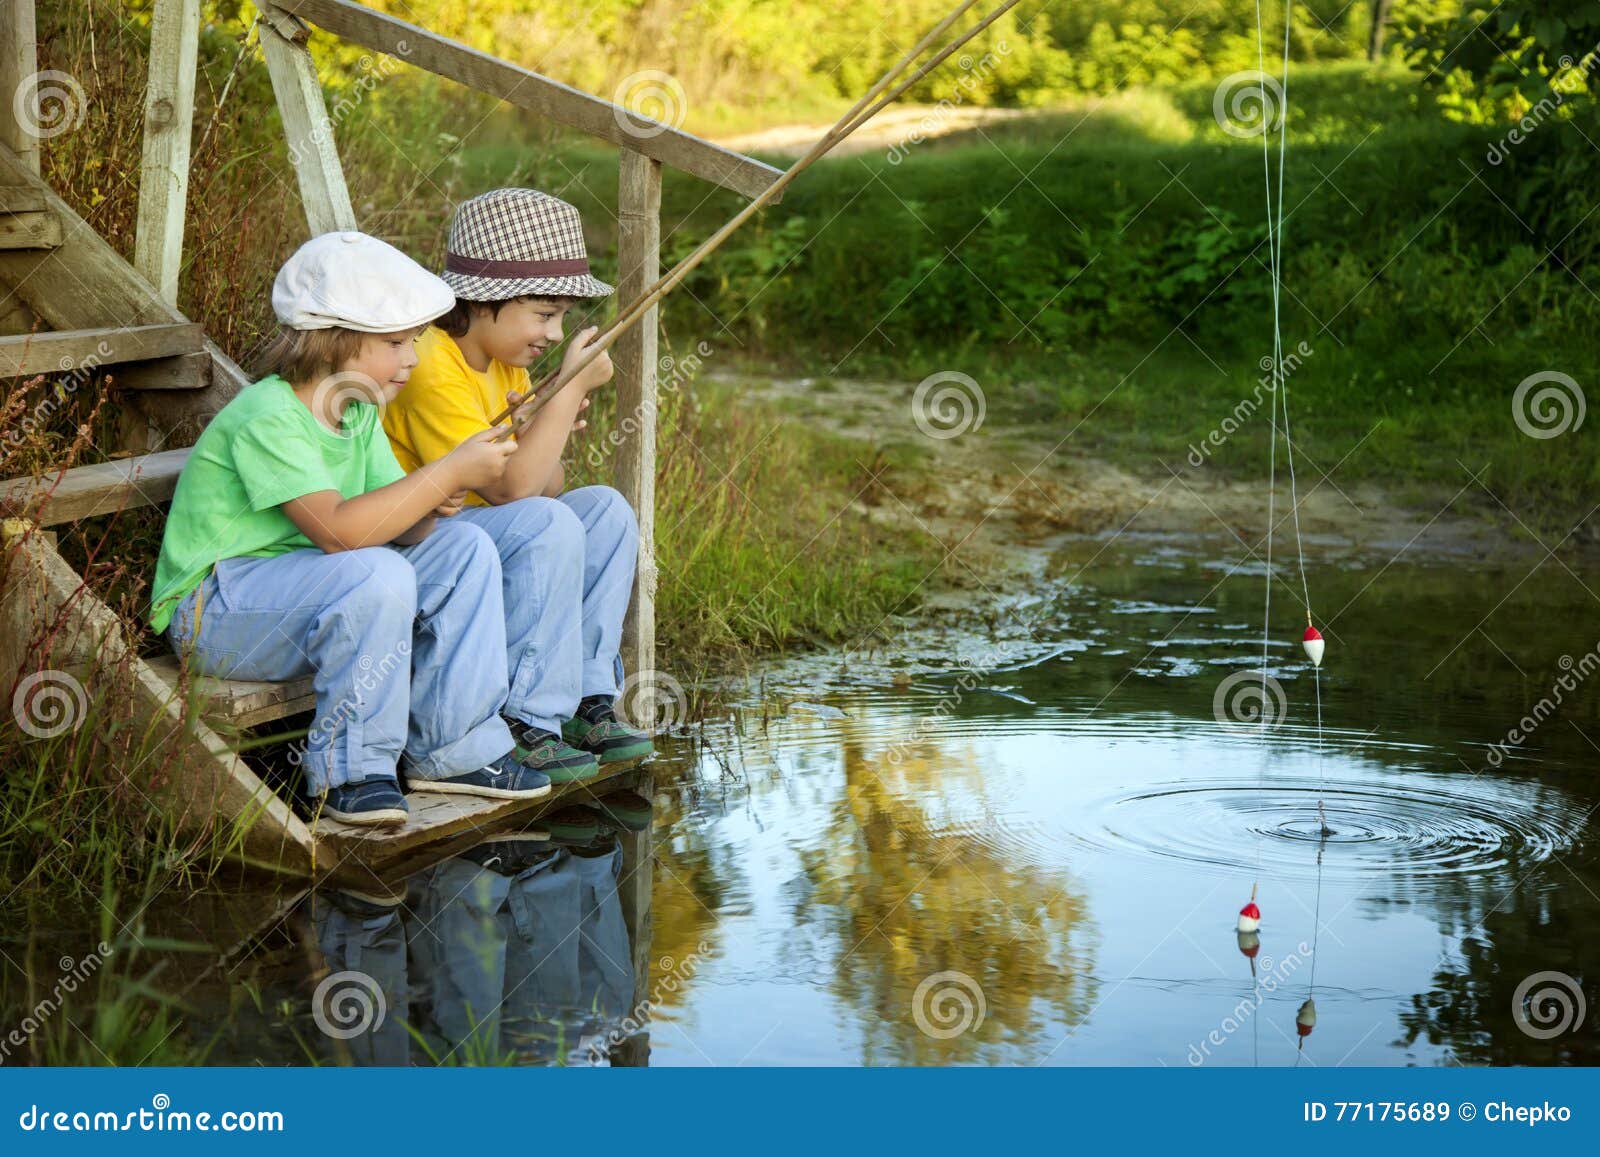 7,782 Child Fisherman Stock Photos - Free & Royalty-Free Stock